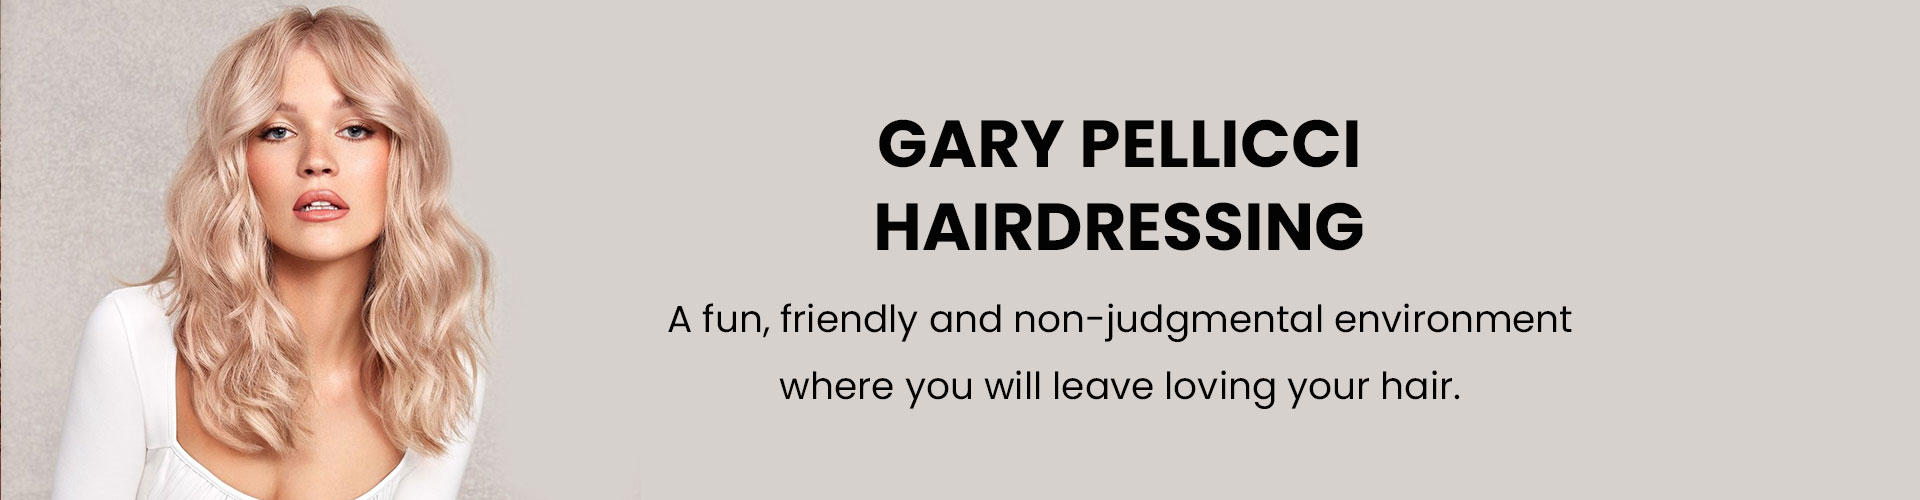 Gary Pellicci Hairdressers Ongar Essex